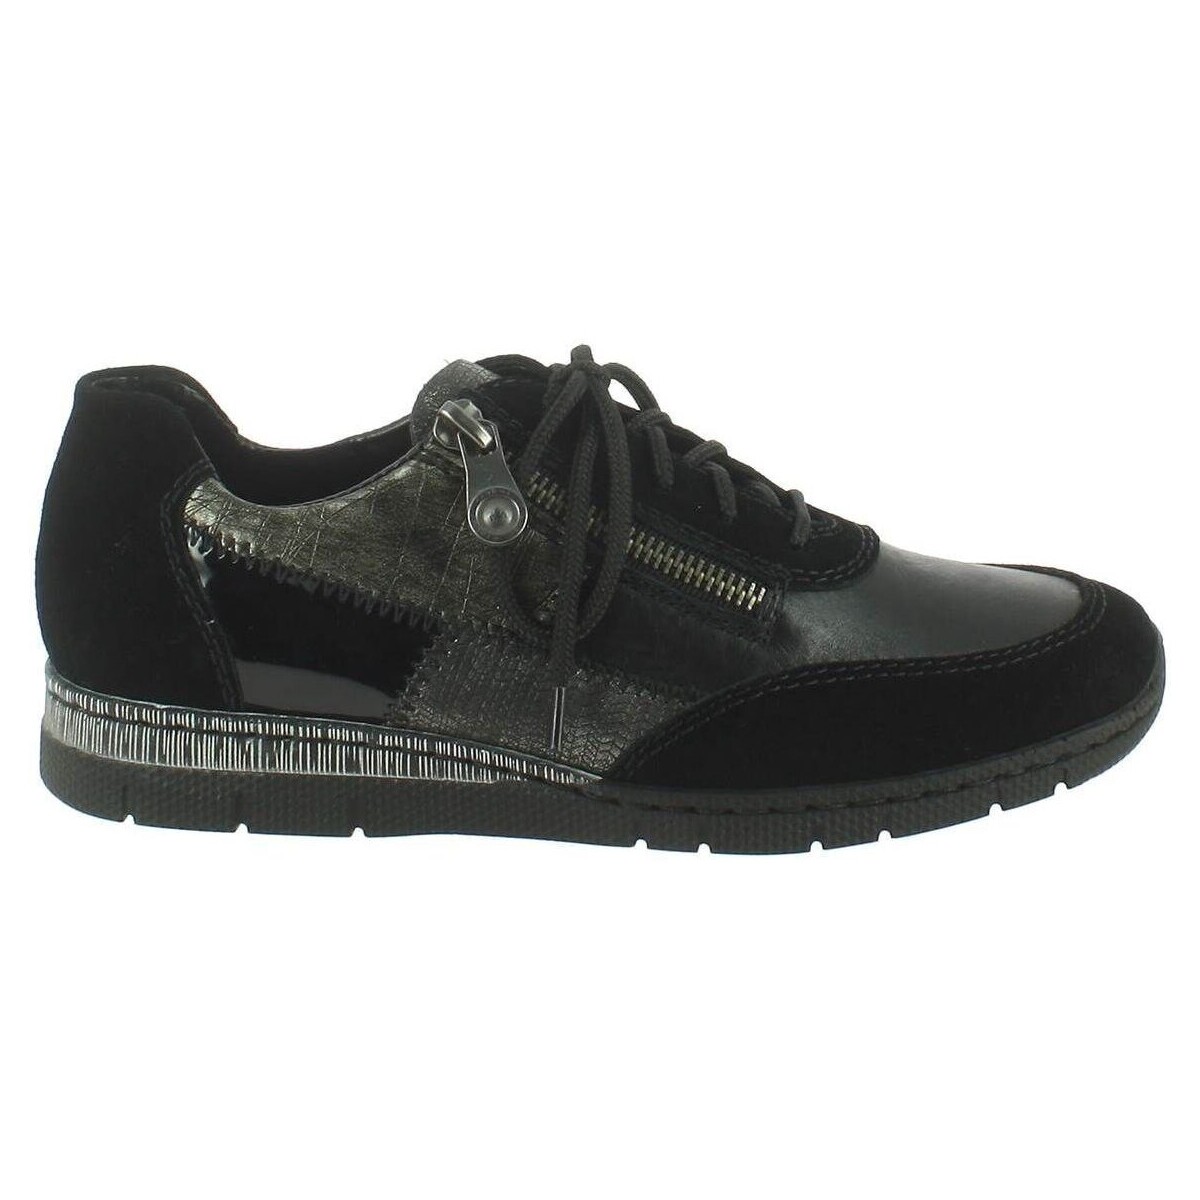 Schoenen Dames Sneakers Rieker N5320 Zwart